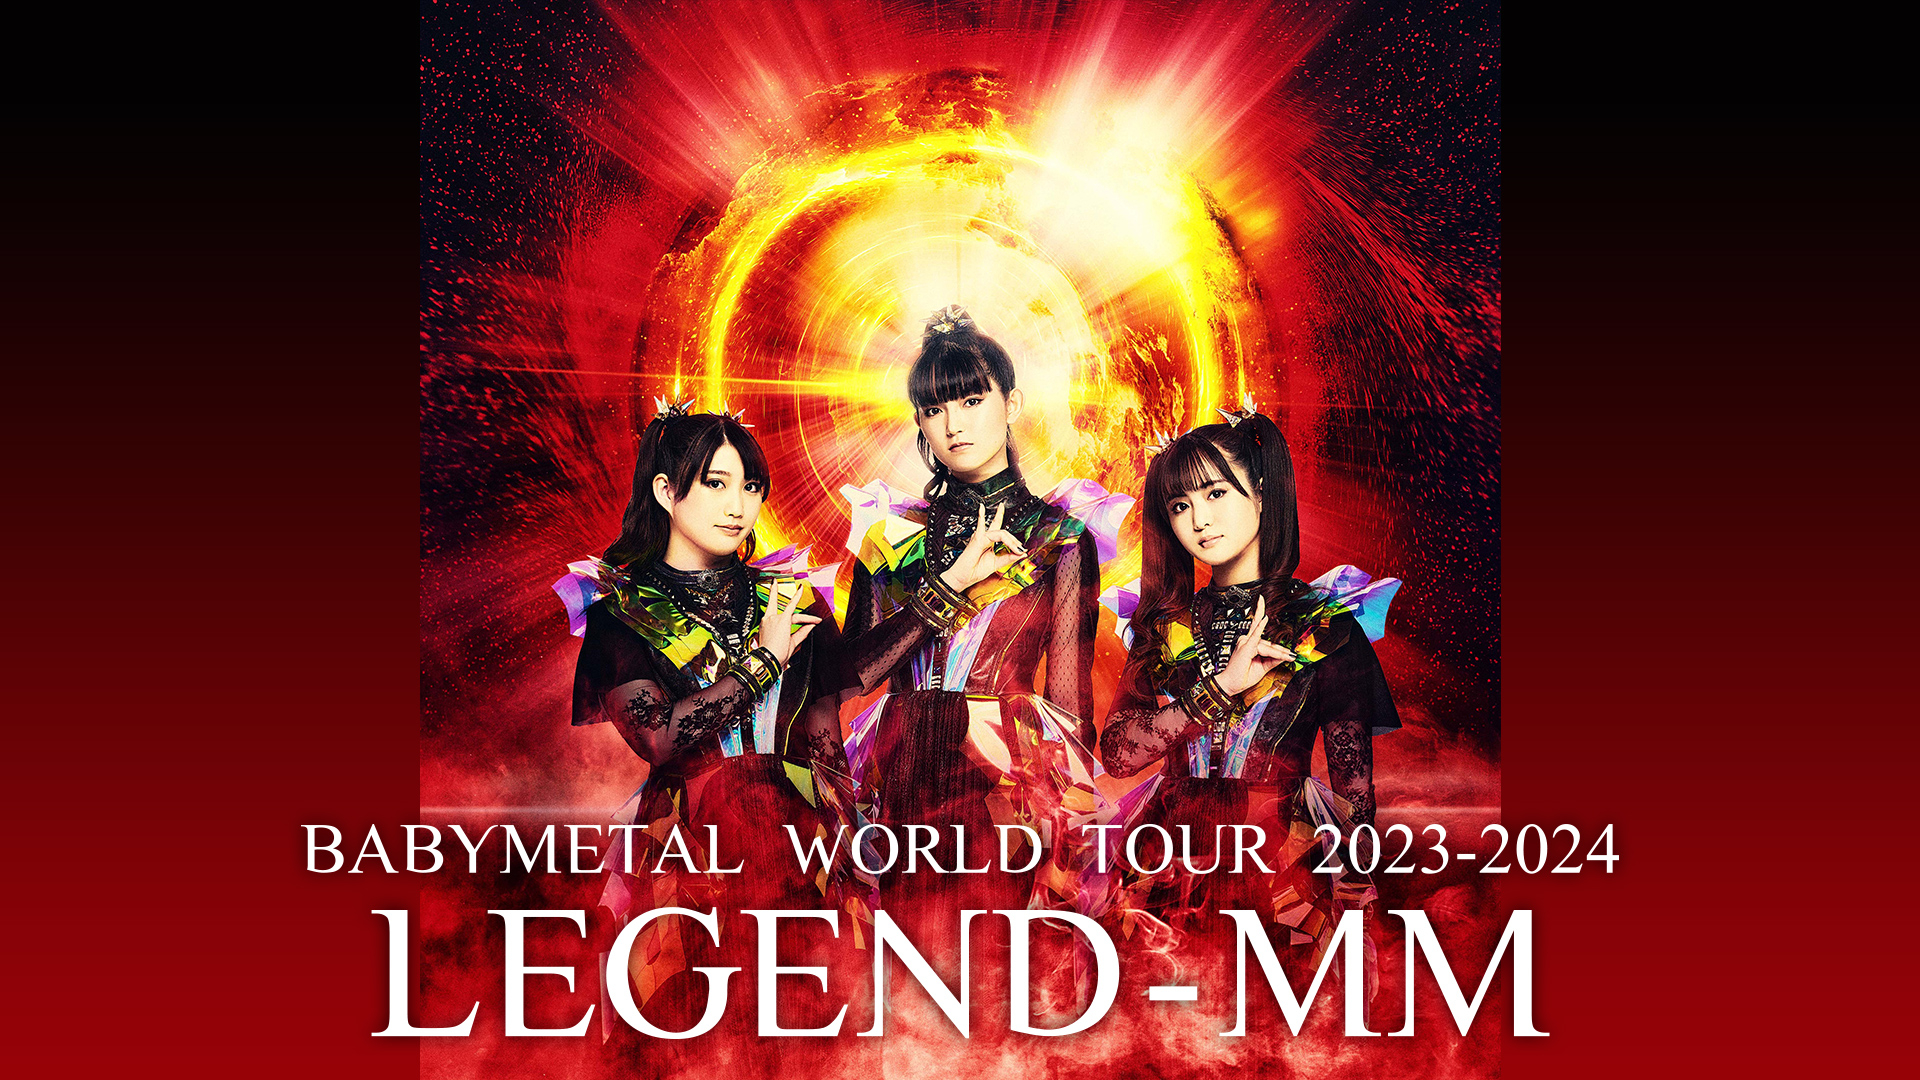 BABYMETAL WORLD TOUR 2023 - 2024 LEGEND - MM | WOWOWオンデマンドで見る